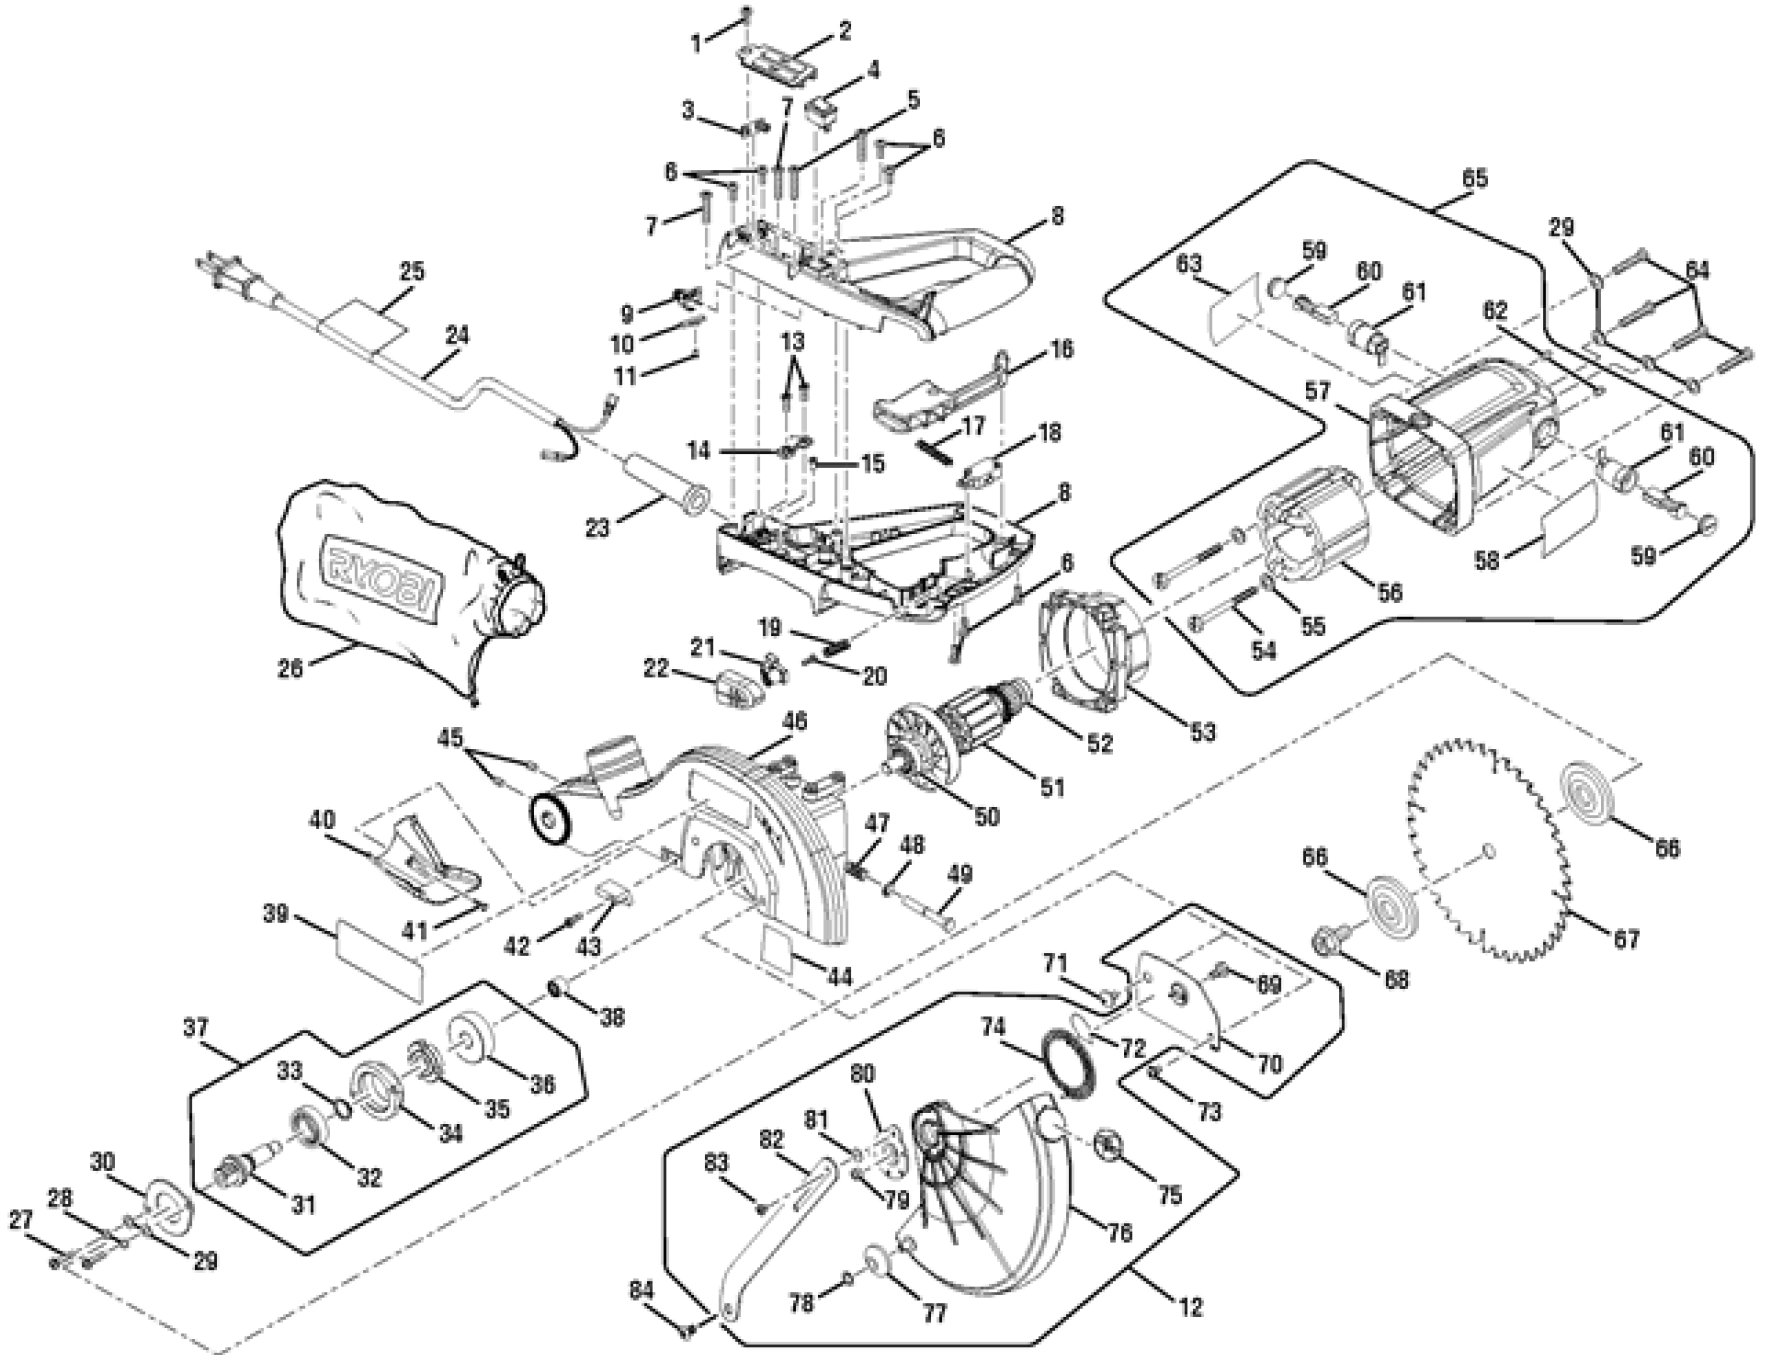 Ryobi Sliding Compound Miter Saw Parts Diagram | Reviewmotors.co